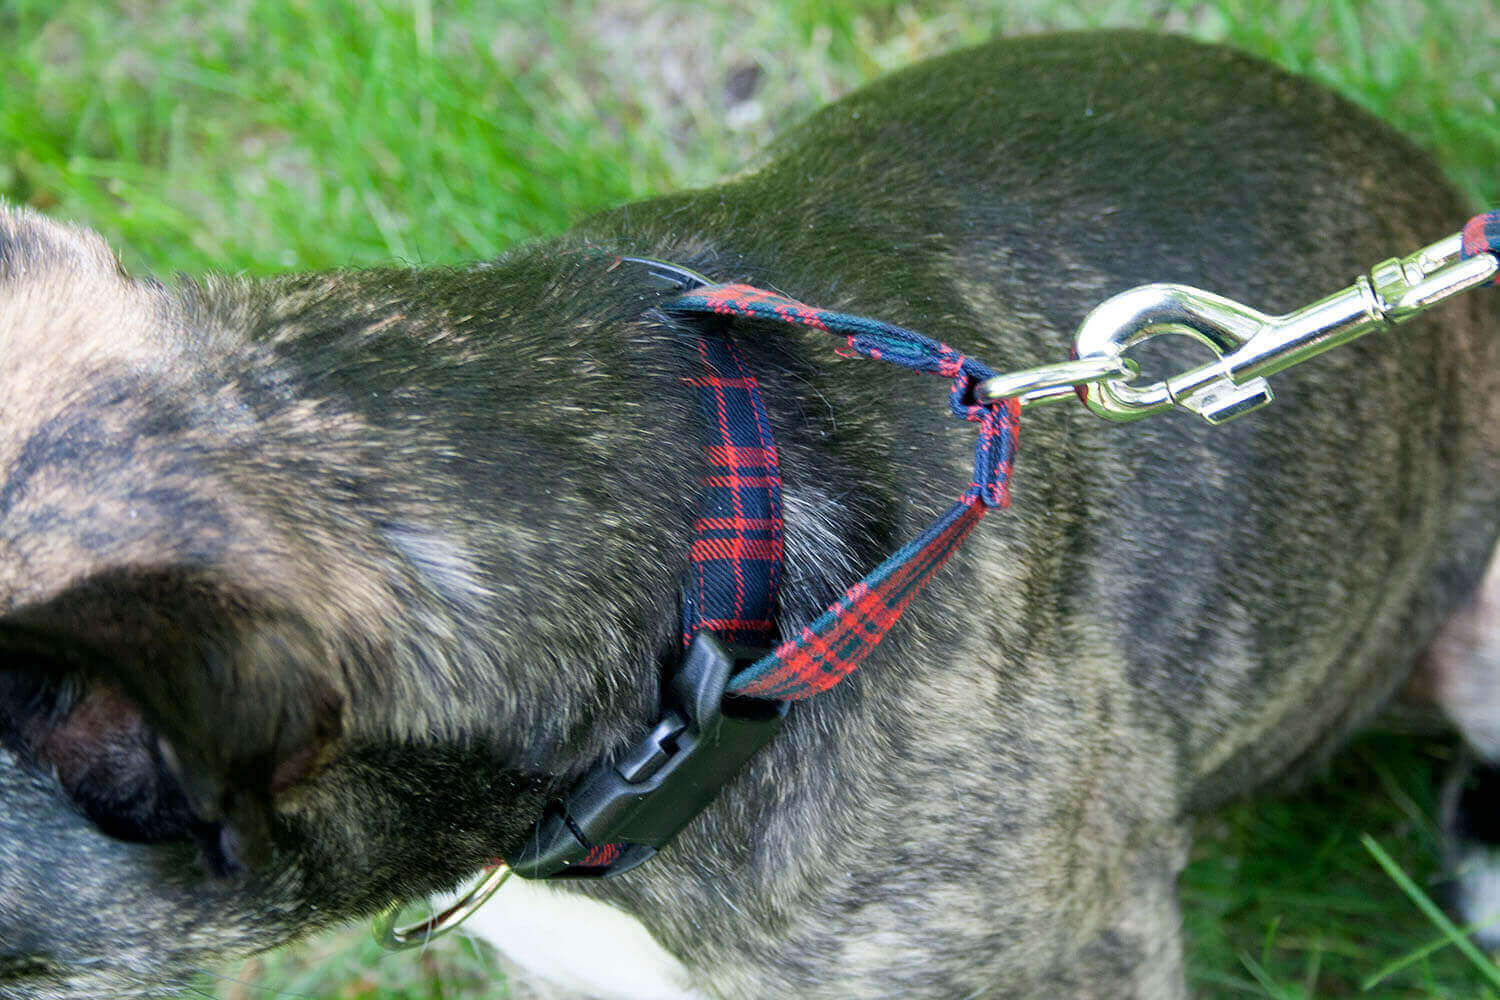 Poly-Viscose 1-Inch Tartan Dog Collar and Leash Set